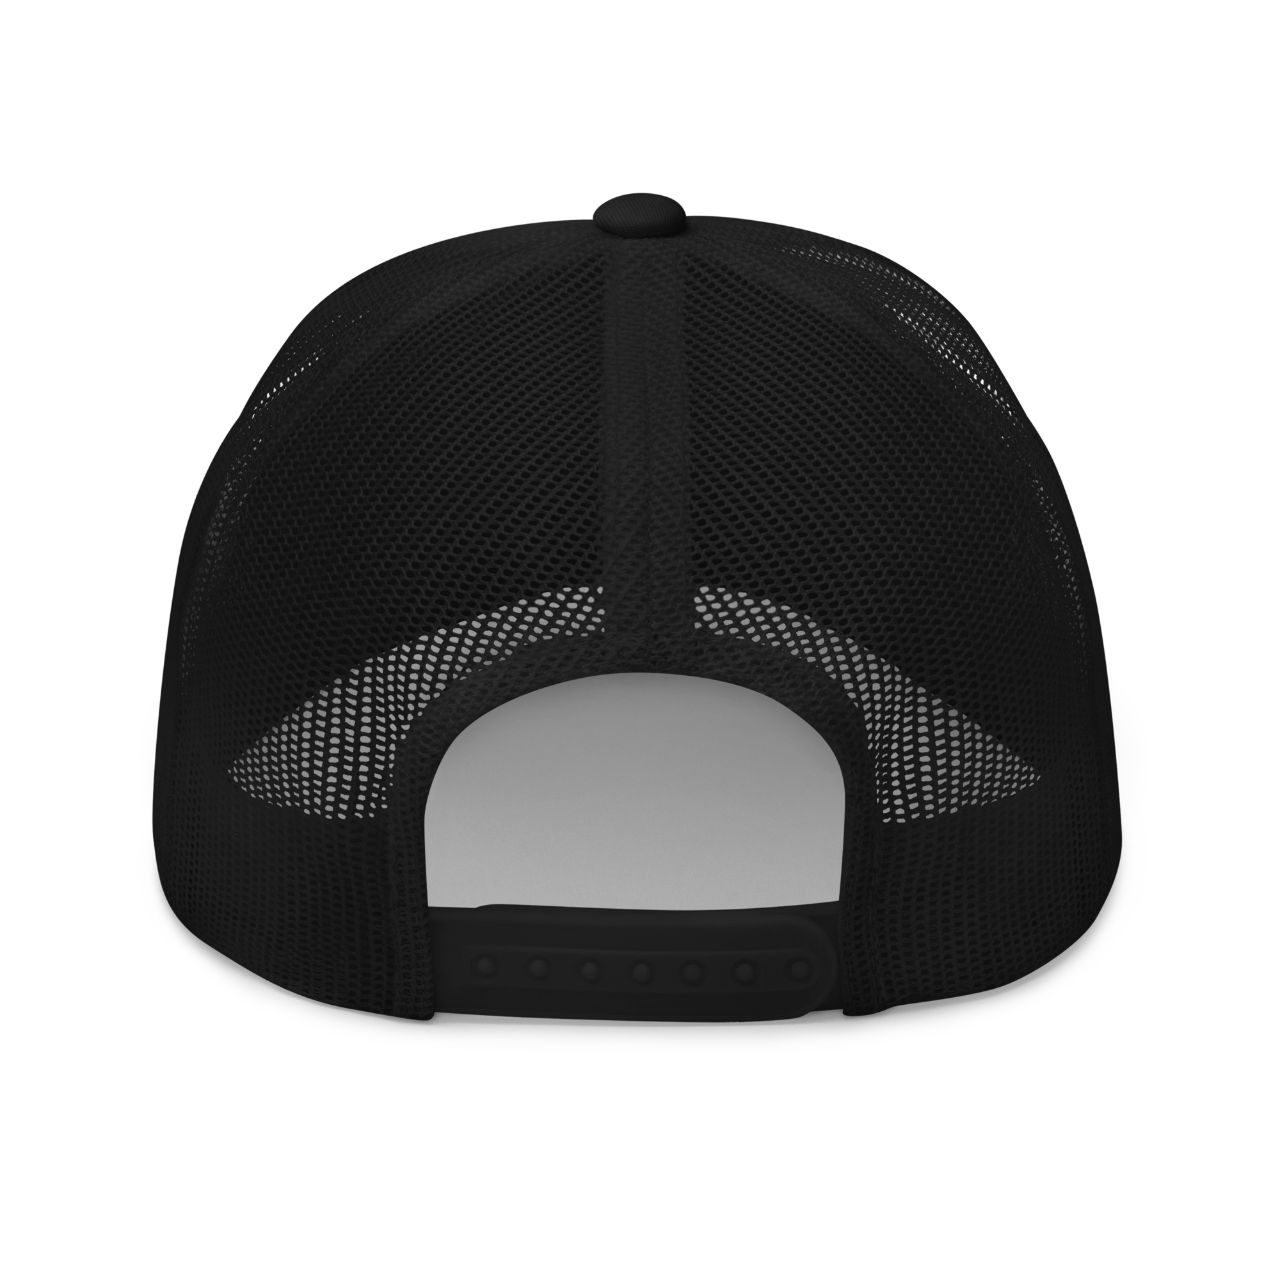 axsgtr axess electronics guitar music industry branded merchandise swag trucker cap hat black back